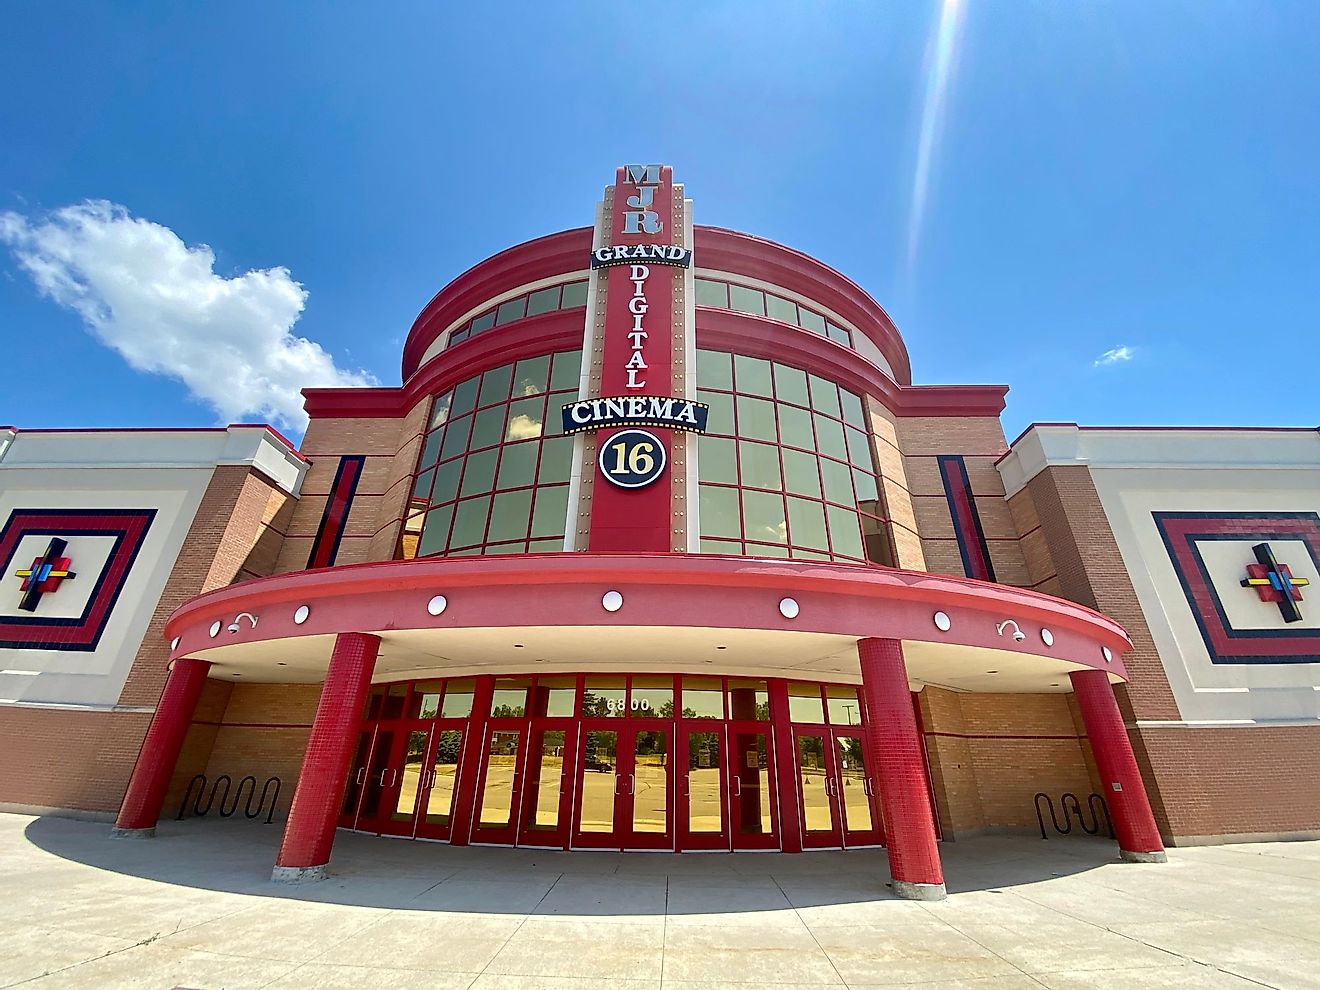 MJR movie theater in Westland, Michigan. Editorial credit: Jam1 Productions / Shutterstock.com